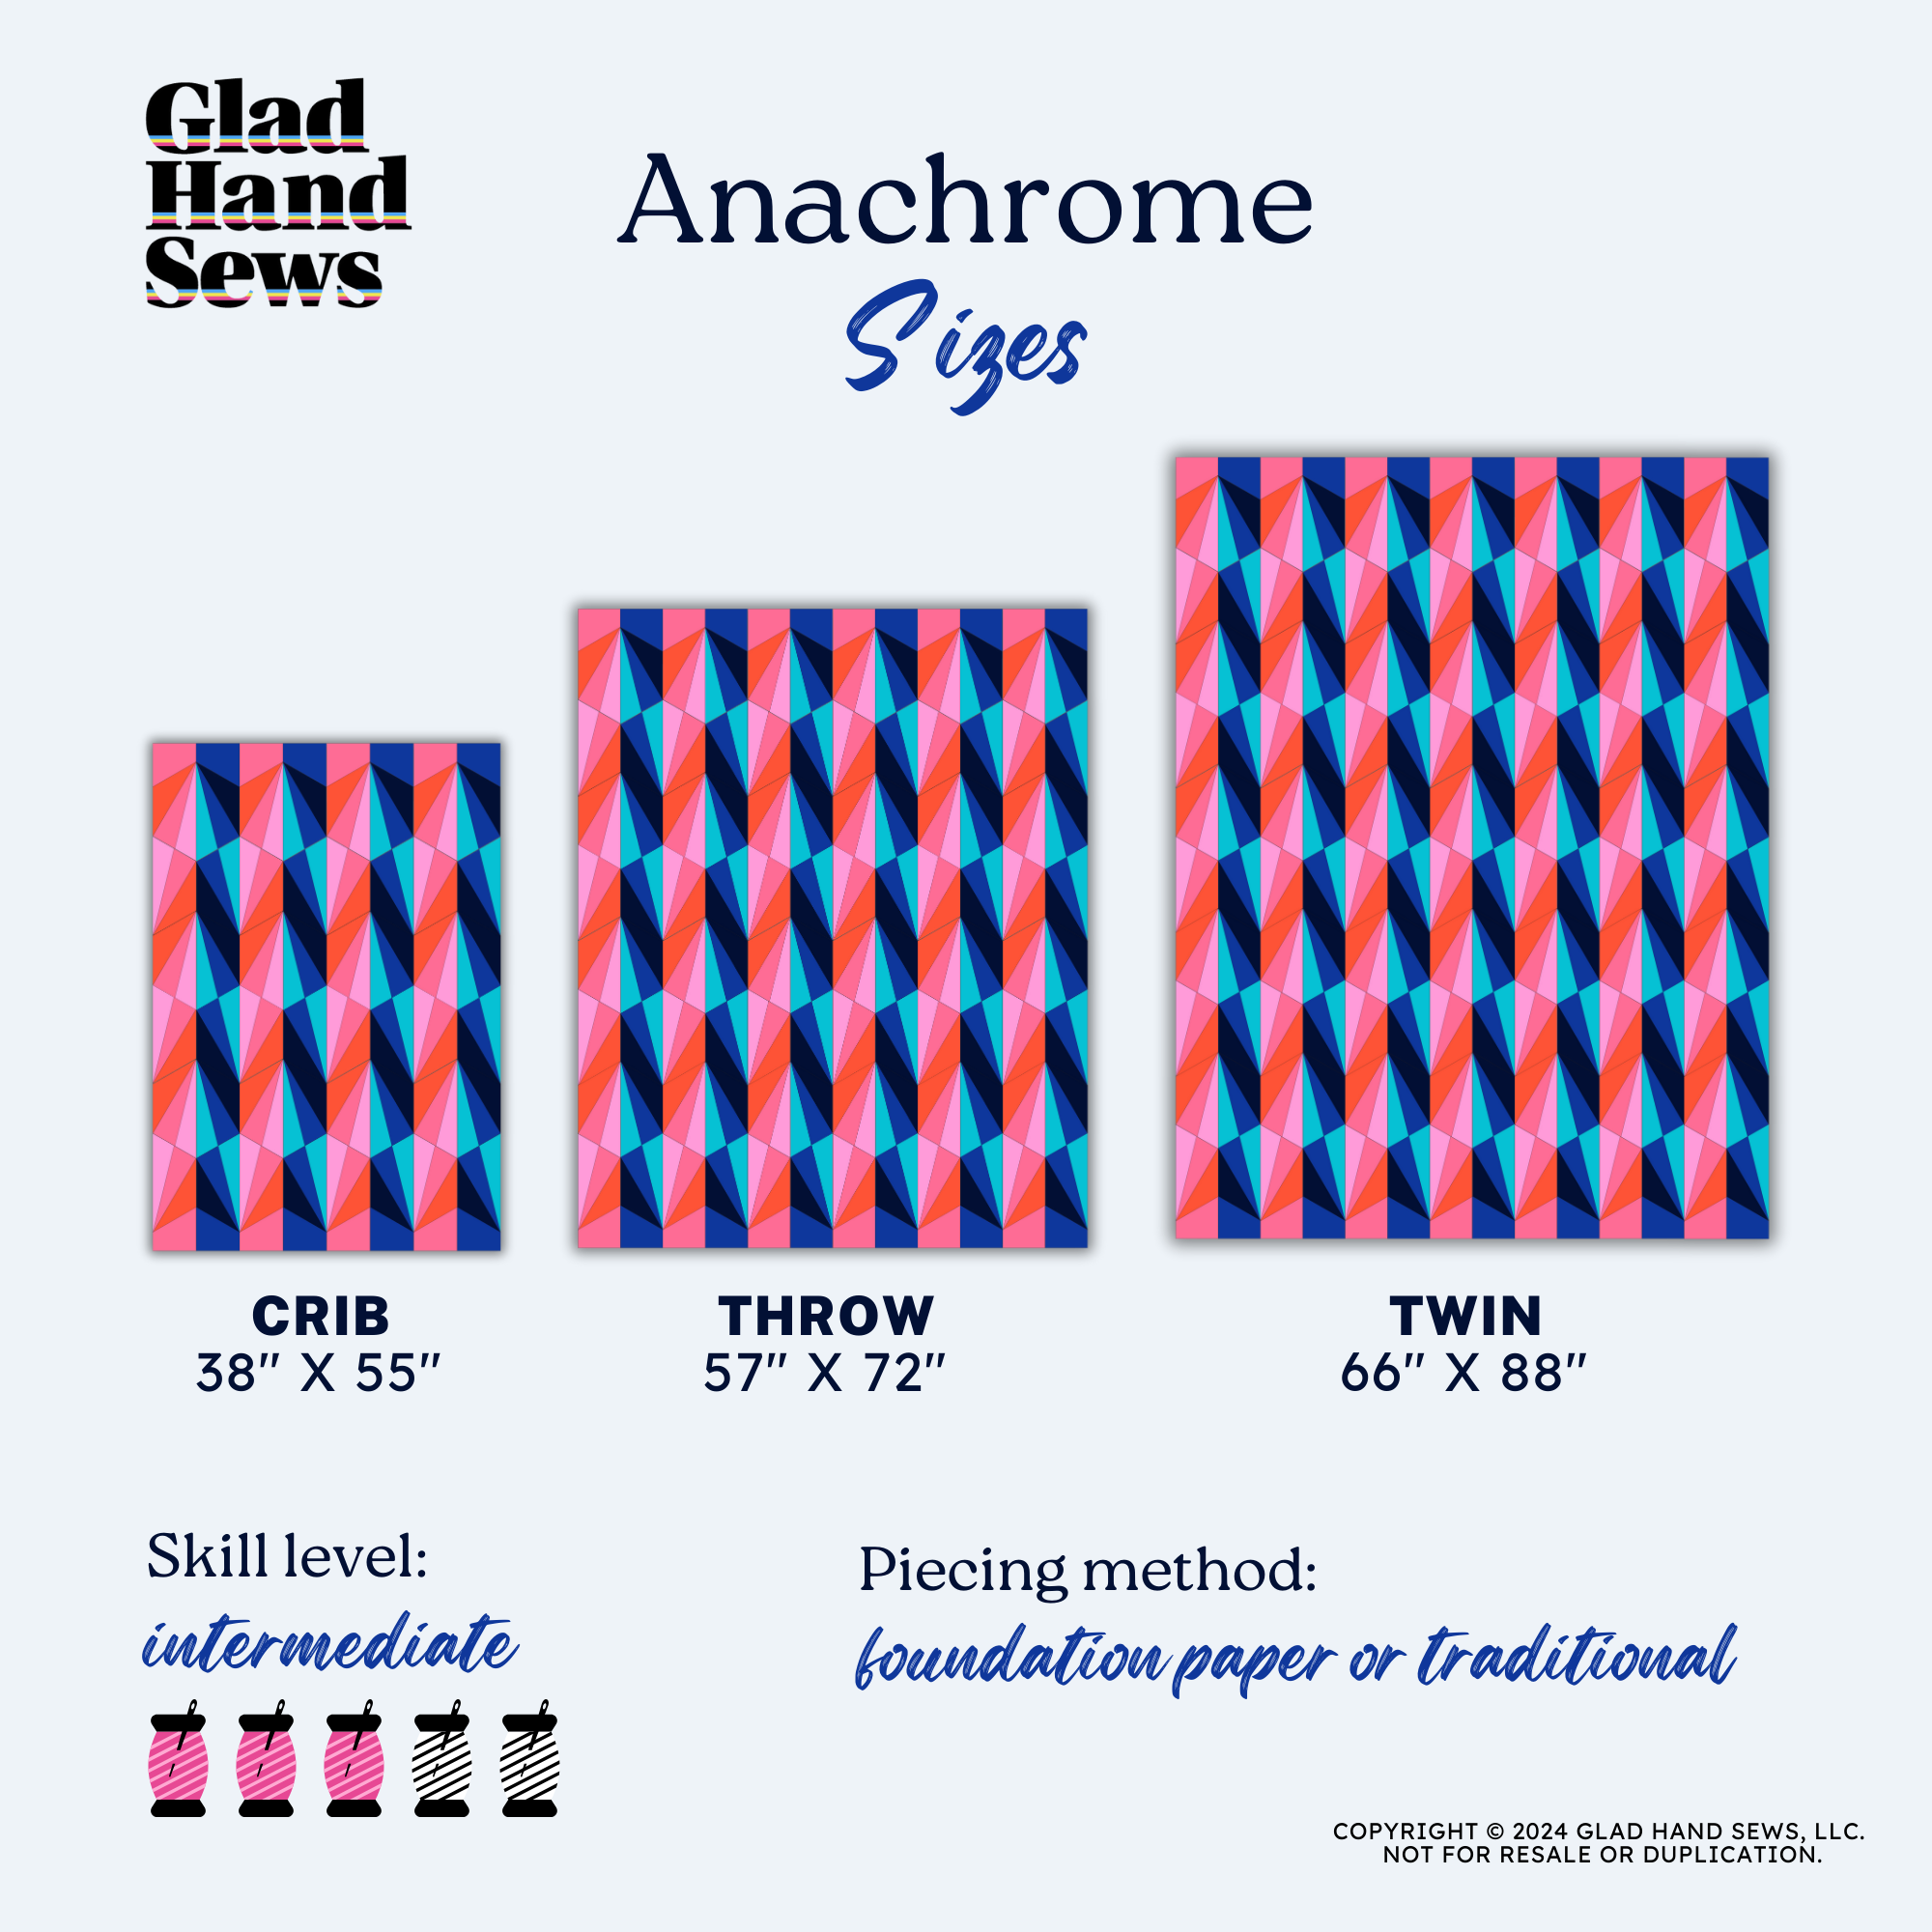 Anachrome_sizes.png